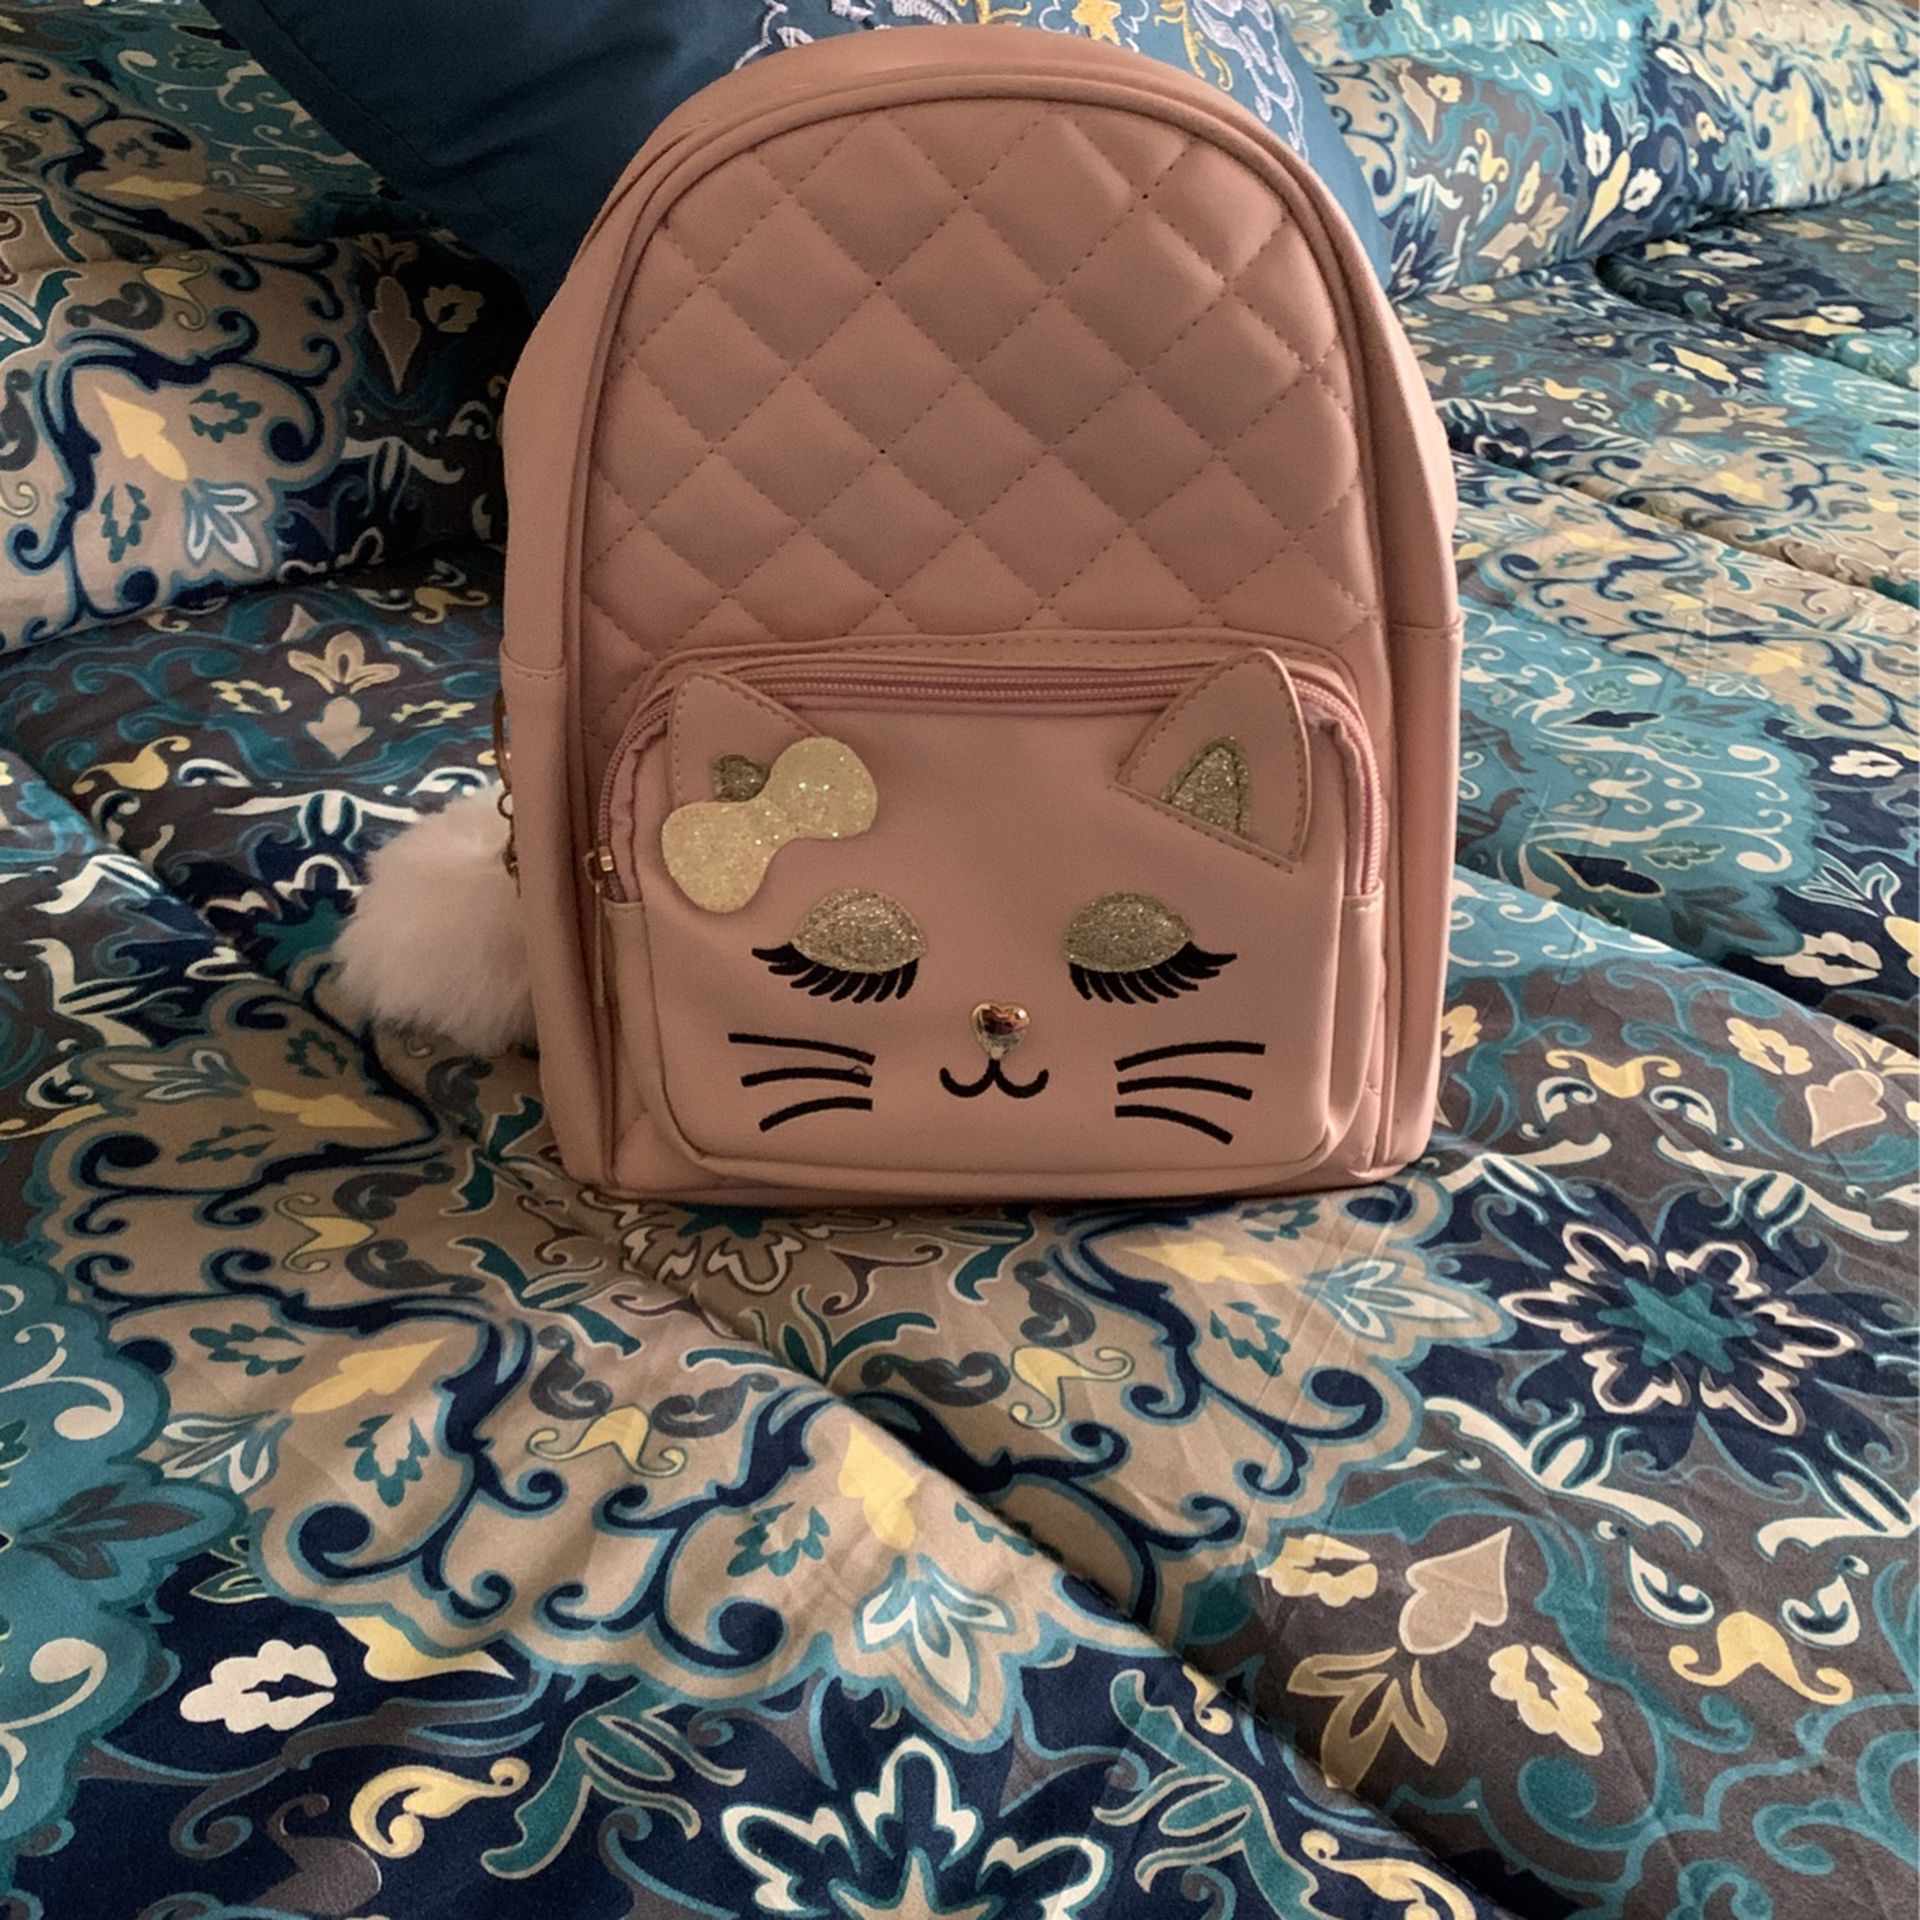 Small, Cute Backpack/hablo español